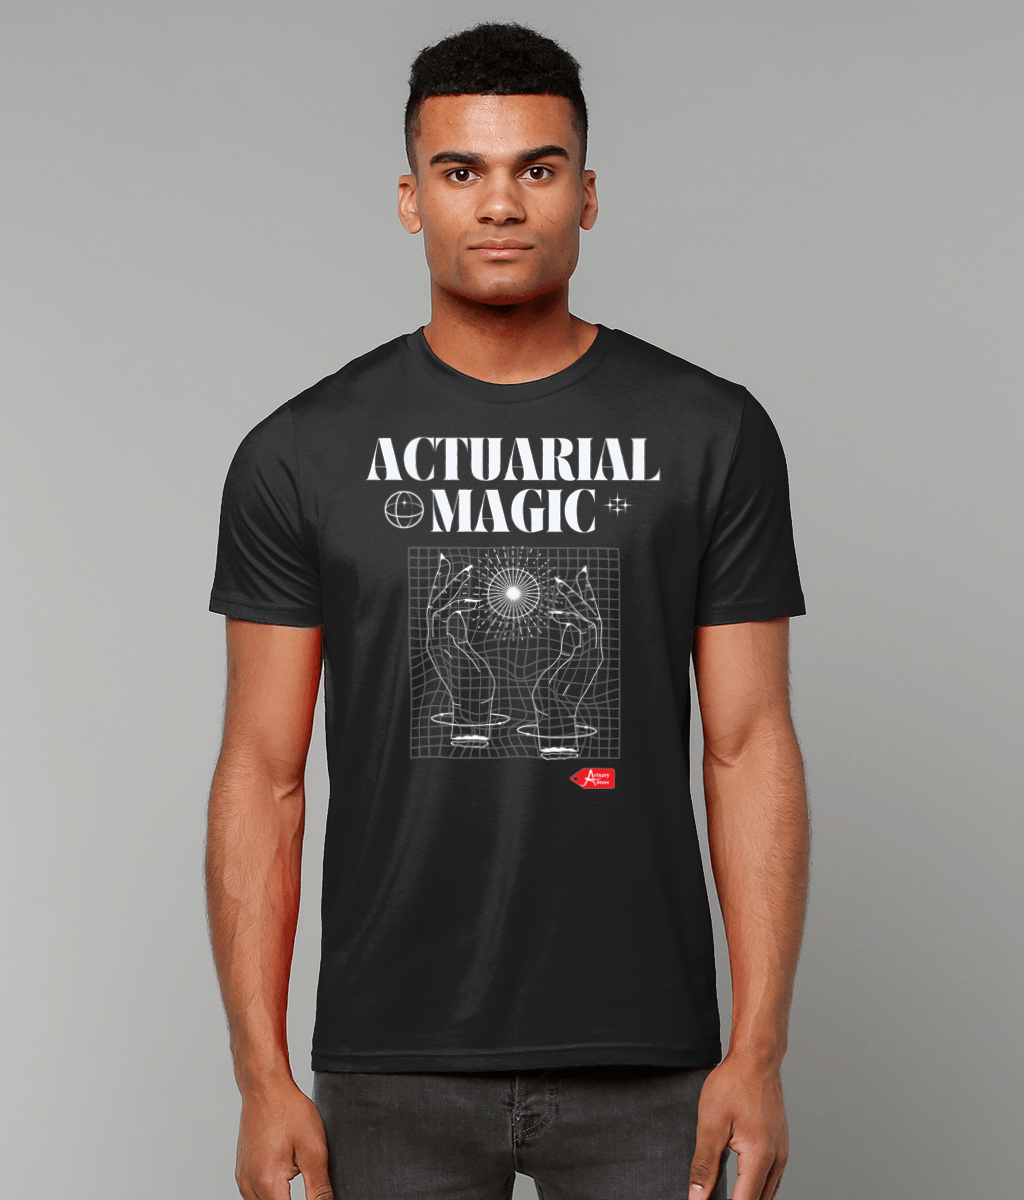 Actuarial Magic Hands Magical Black T-Shirt